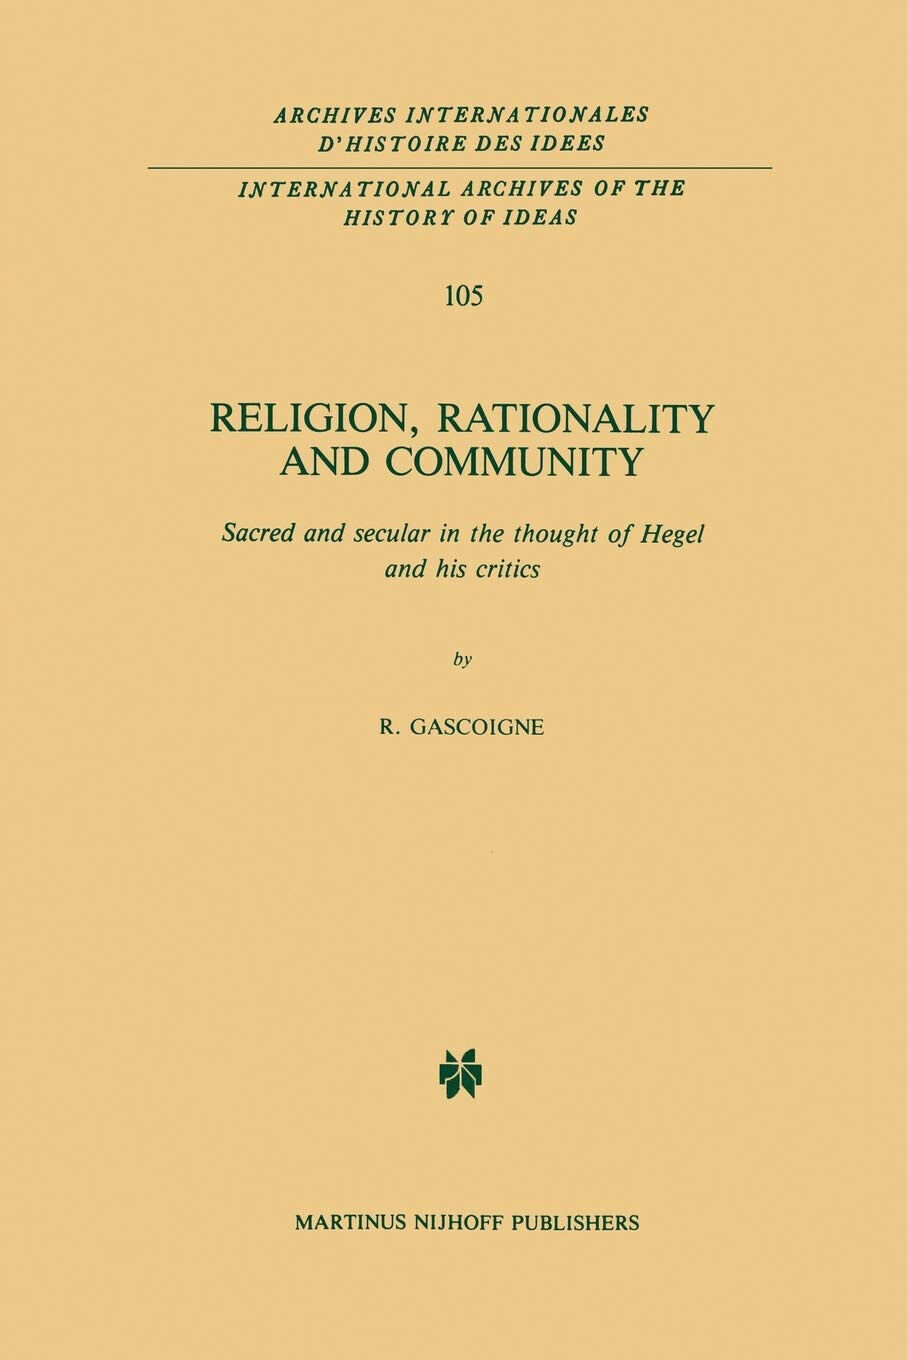 Religion, Rationality and Community - Robert Gascoigne - Springer, 2013